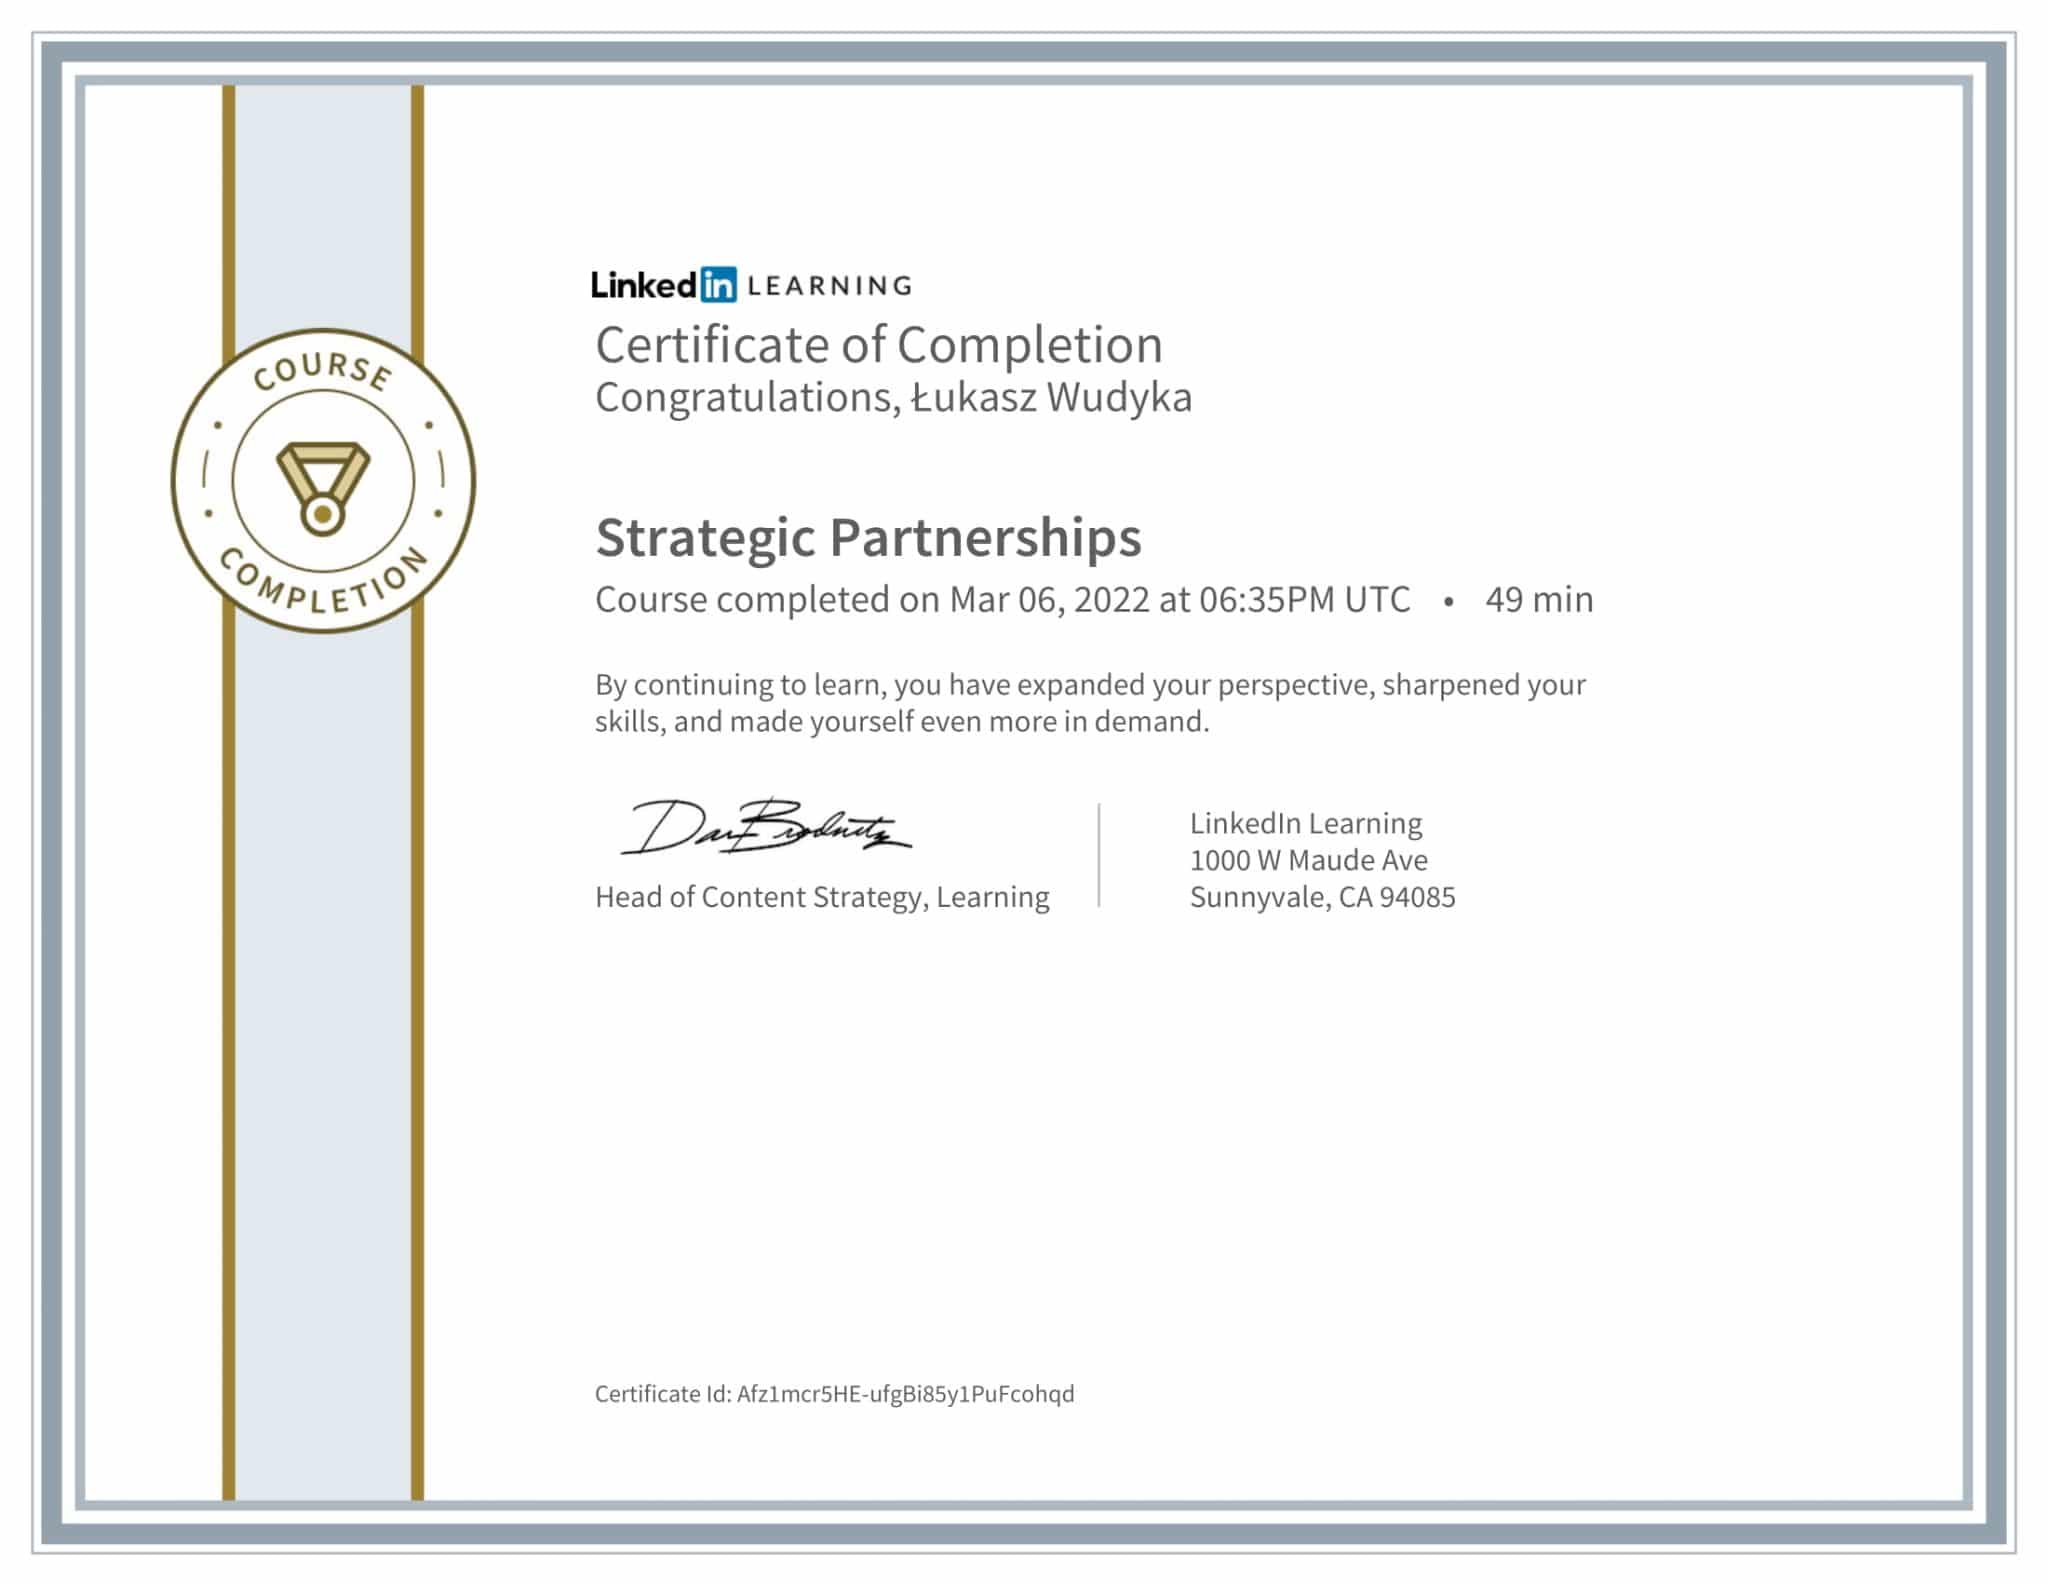 CertificateOfCompletion_Strategic Partnerships-1